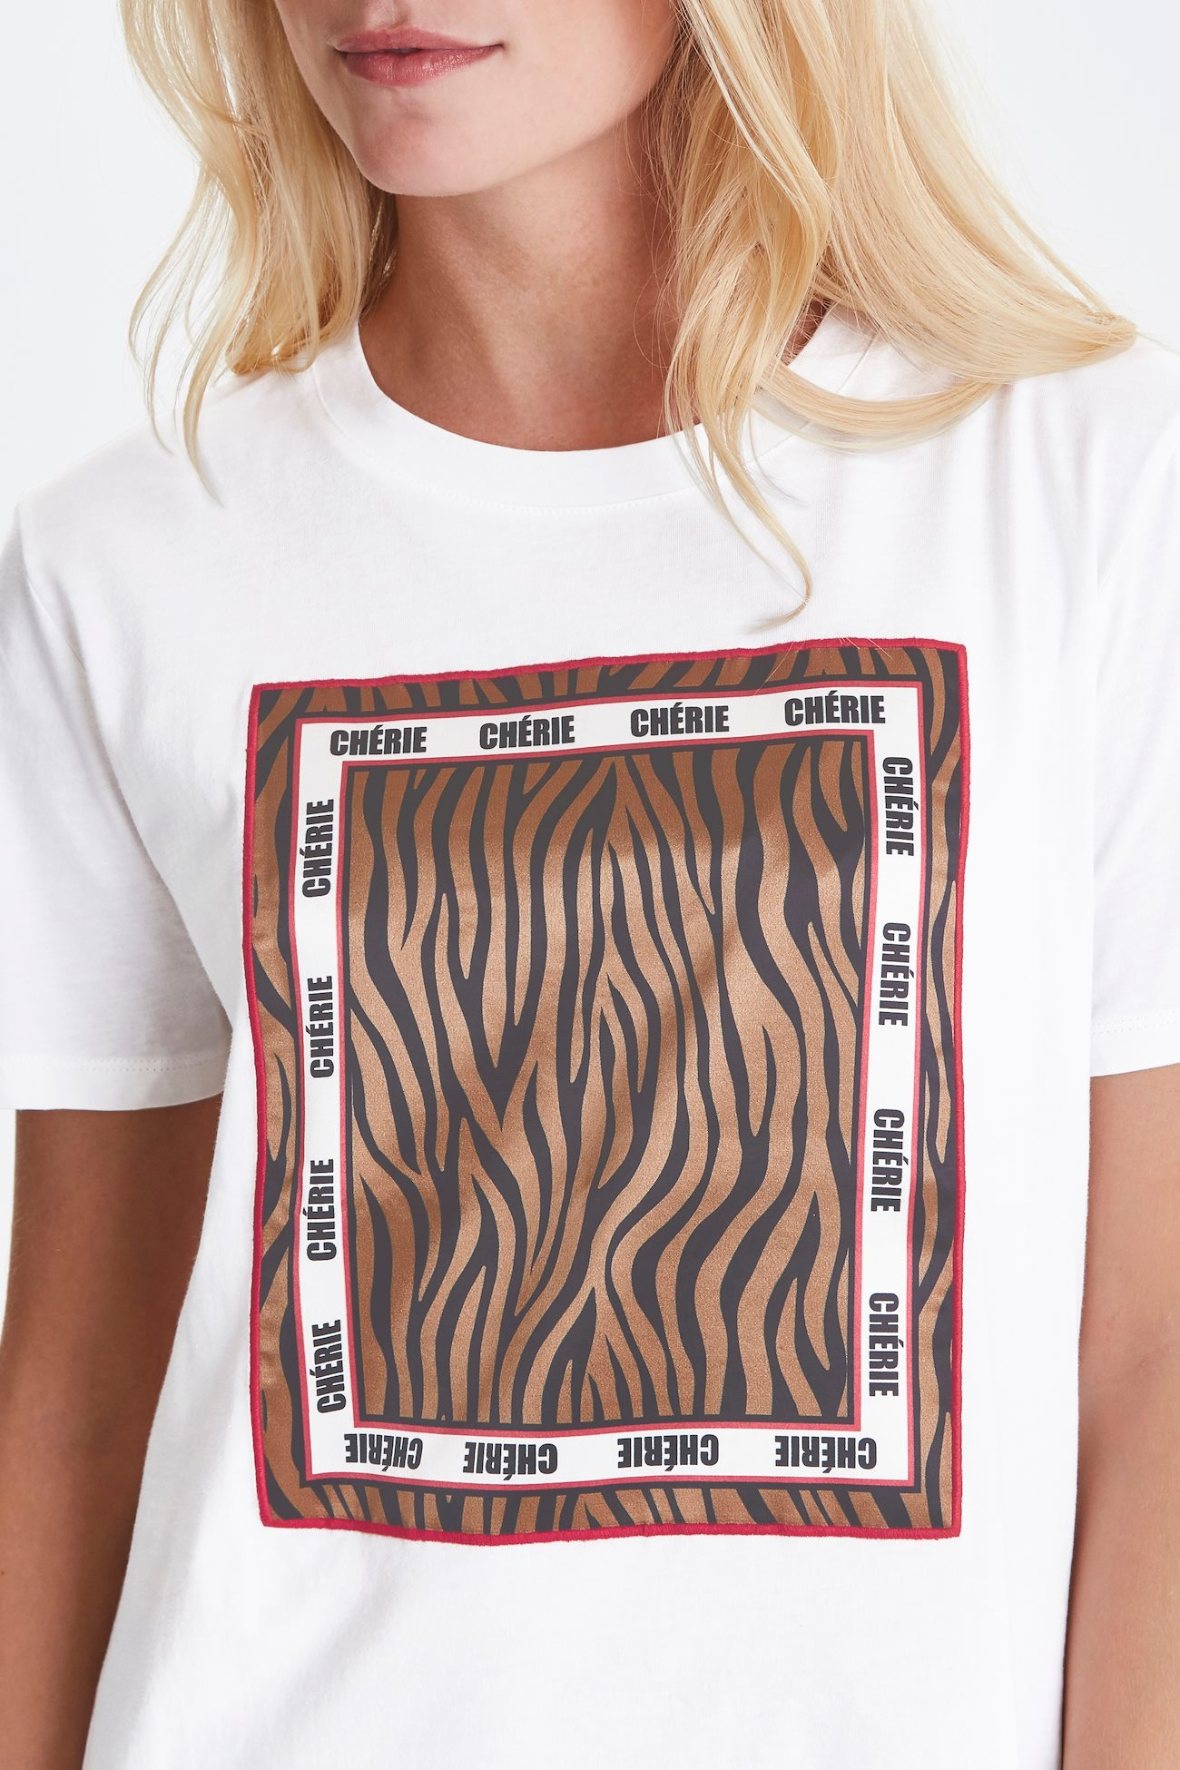 Pulz Zebra t-shirt i hvid med print på bryst damer - Hos Lohse